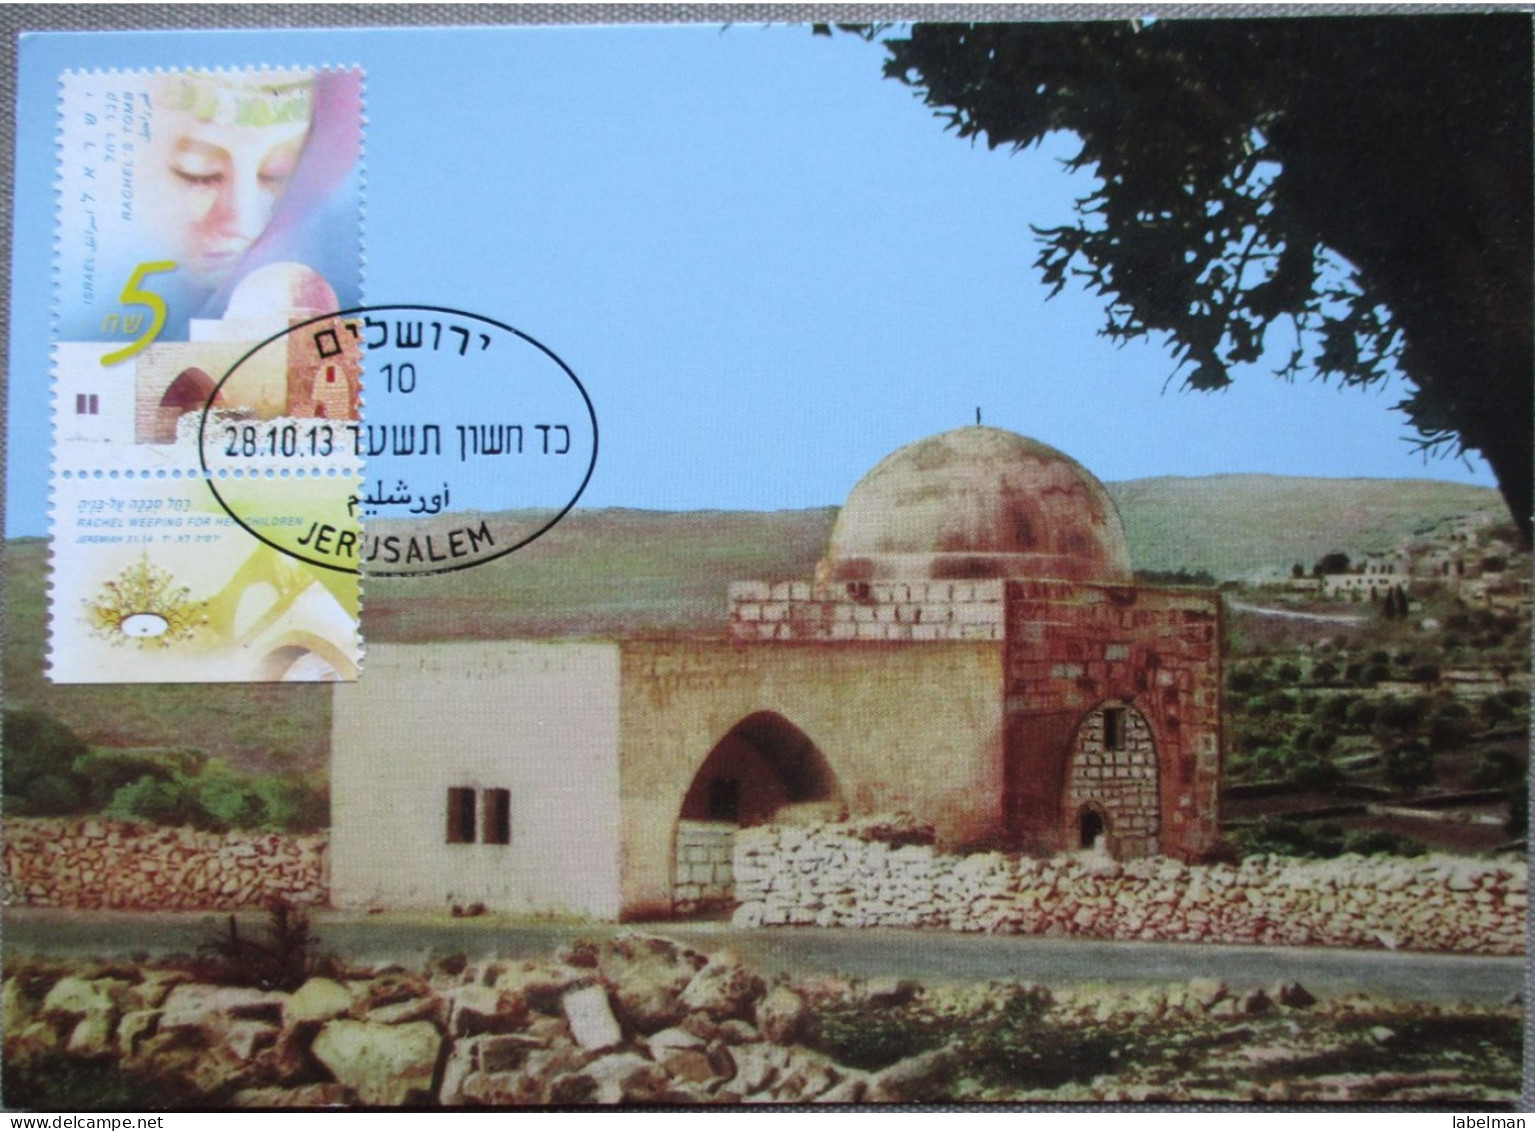 ISRAEL 2013 MAXIMUM CARD POSTCARD BETHLEHEM RACHEL TOMB FIRST DAY OF ISSUE CARTOLINA CARTE POSTALE POSTKARTE CARTOLINA - Cartes-maximum